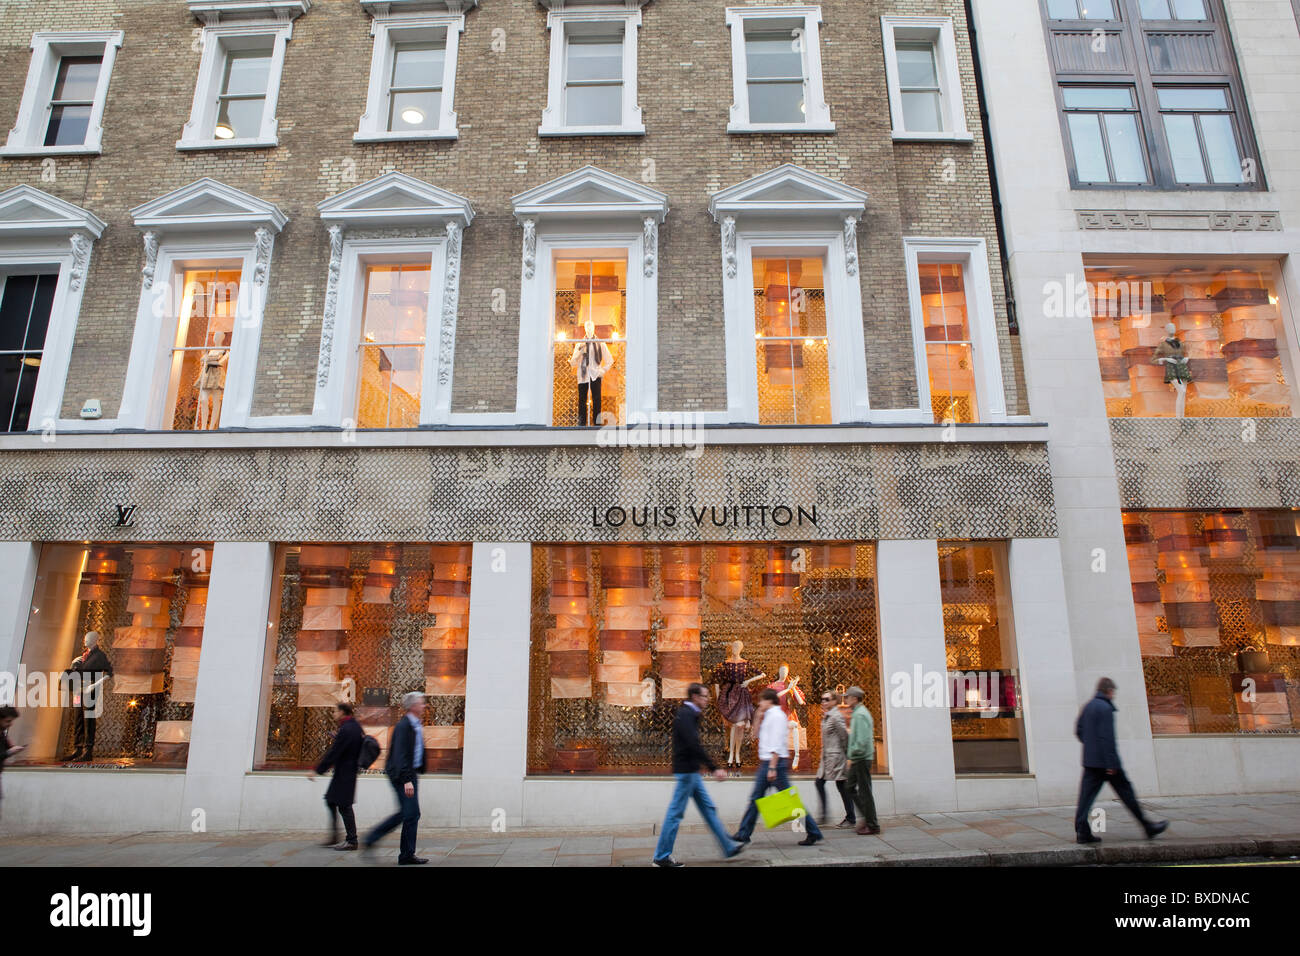 Louis Vuitton shop in New Bond street, London, Stock Photo